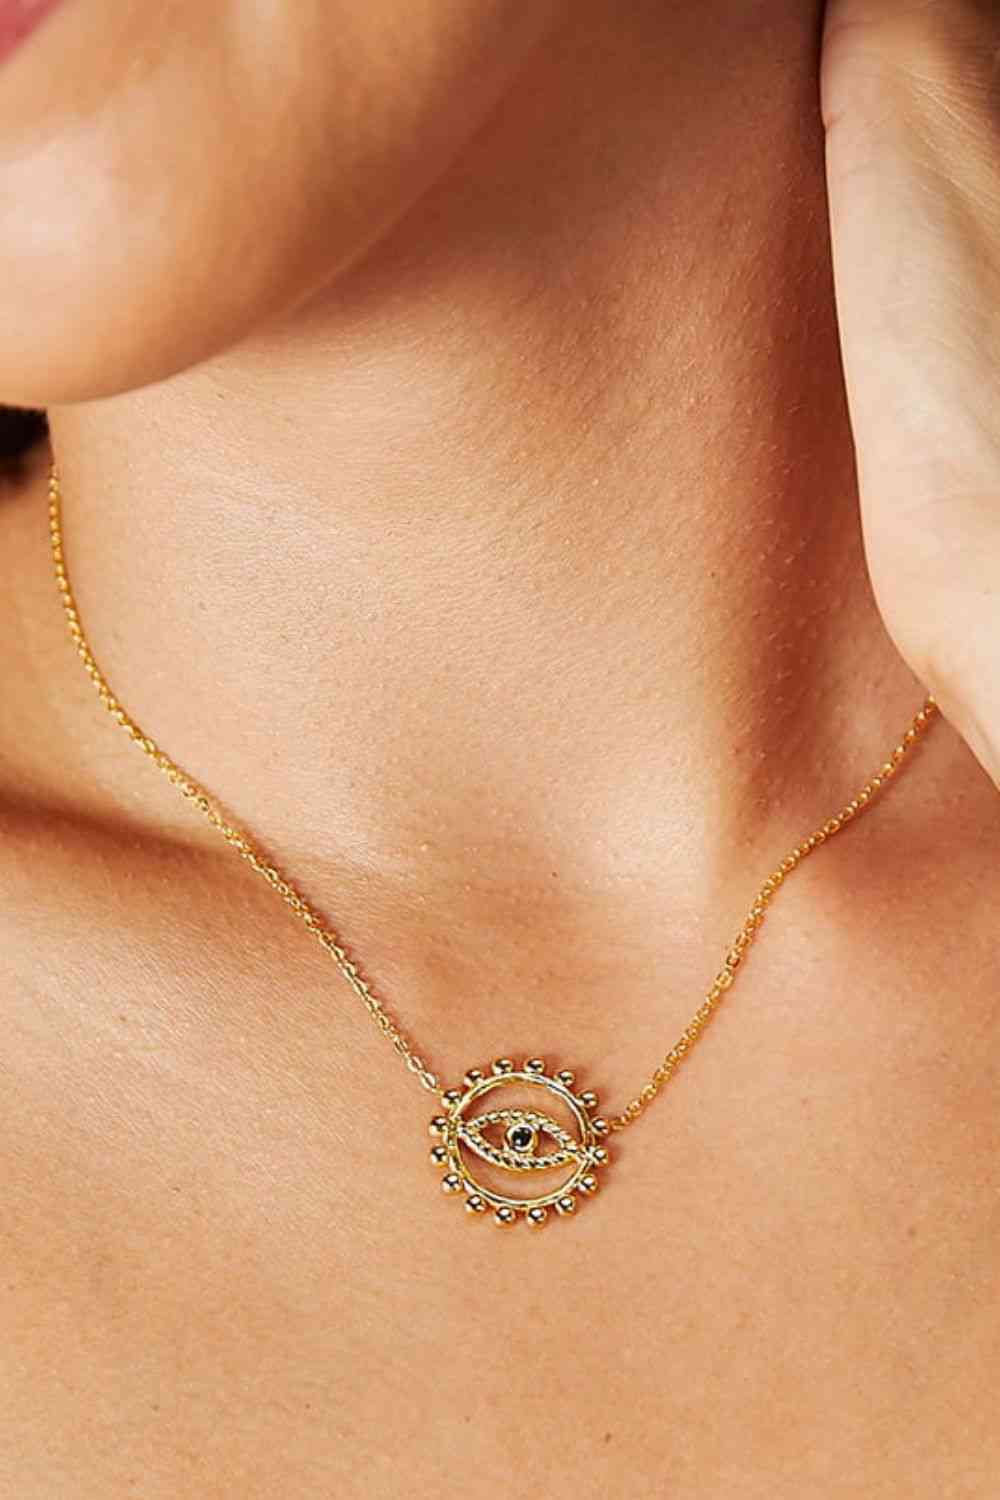 Alyssa - Adored Eye Pendant Necklace